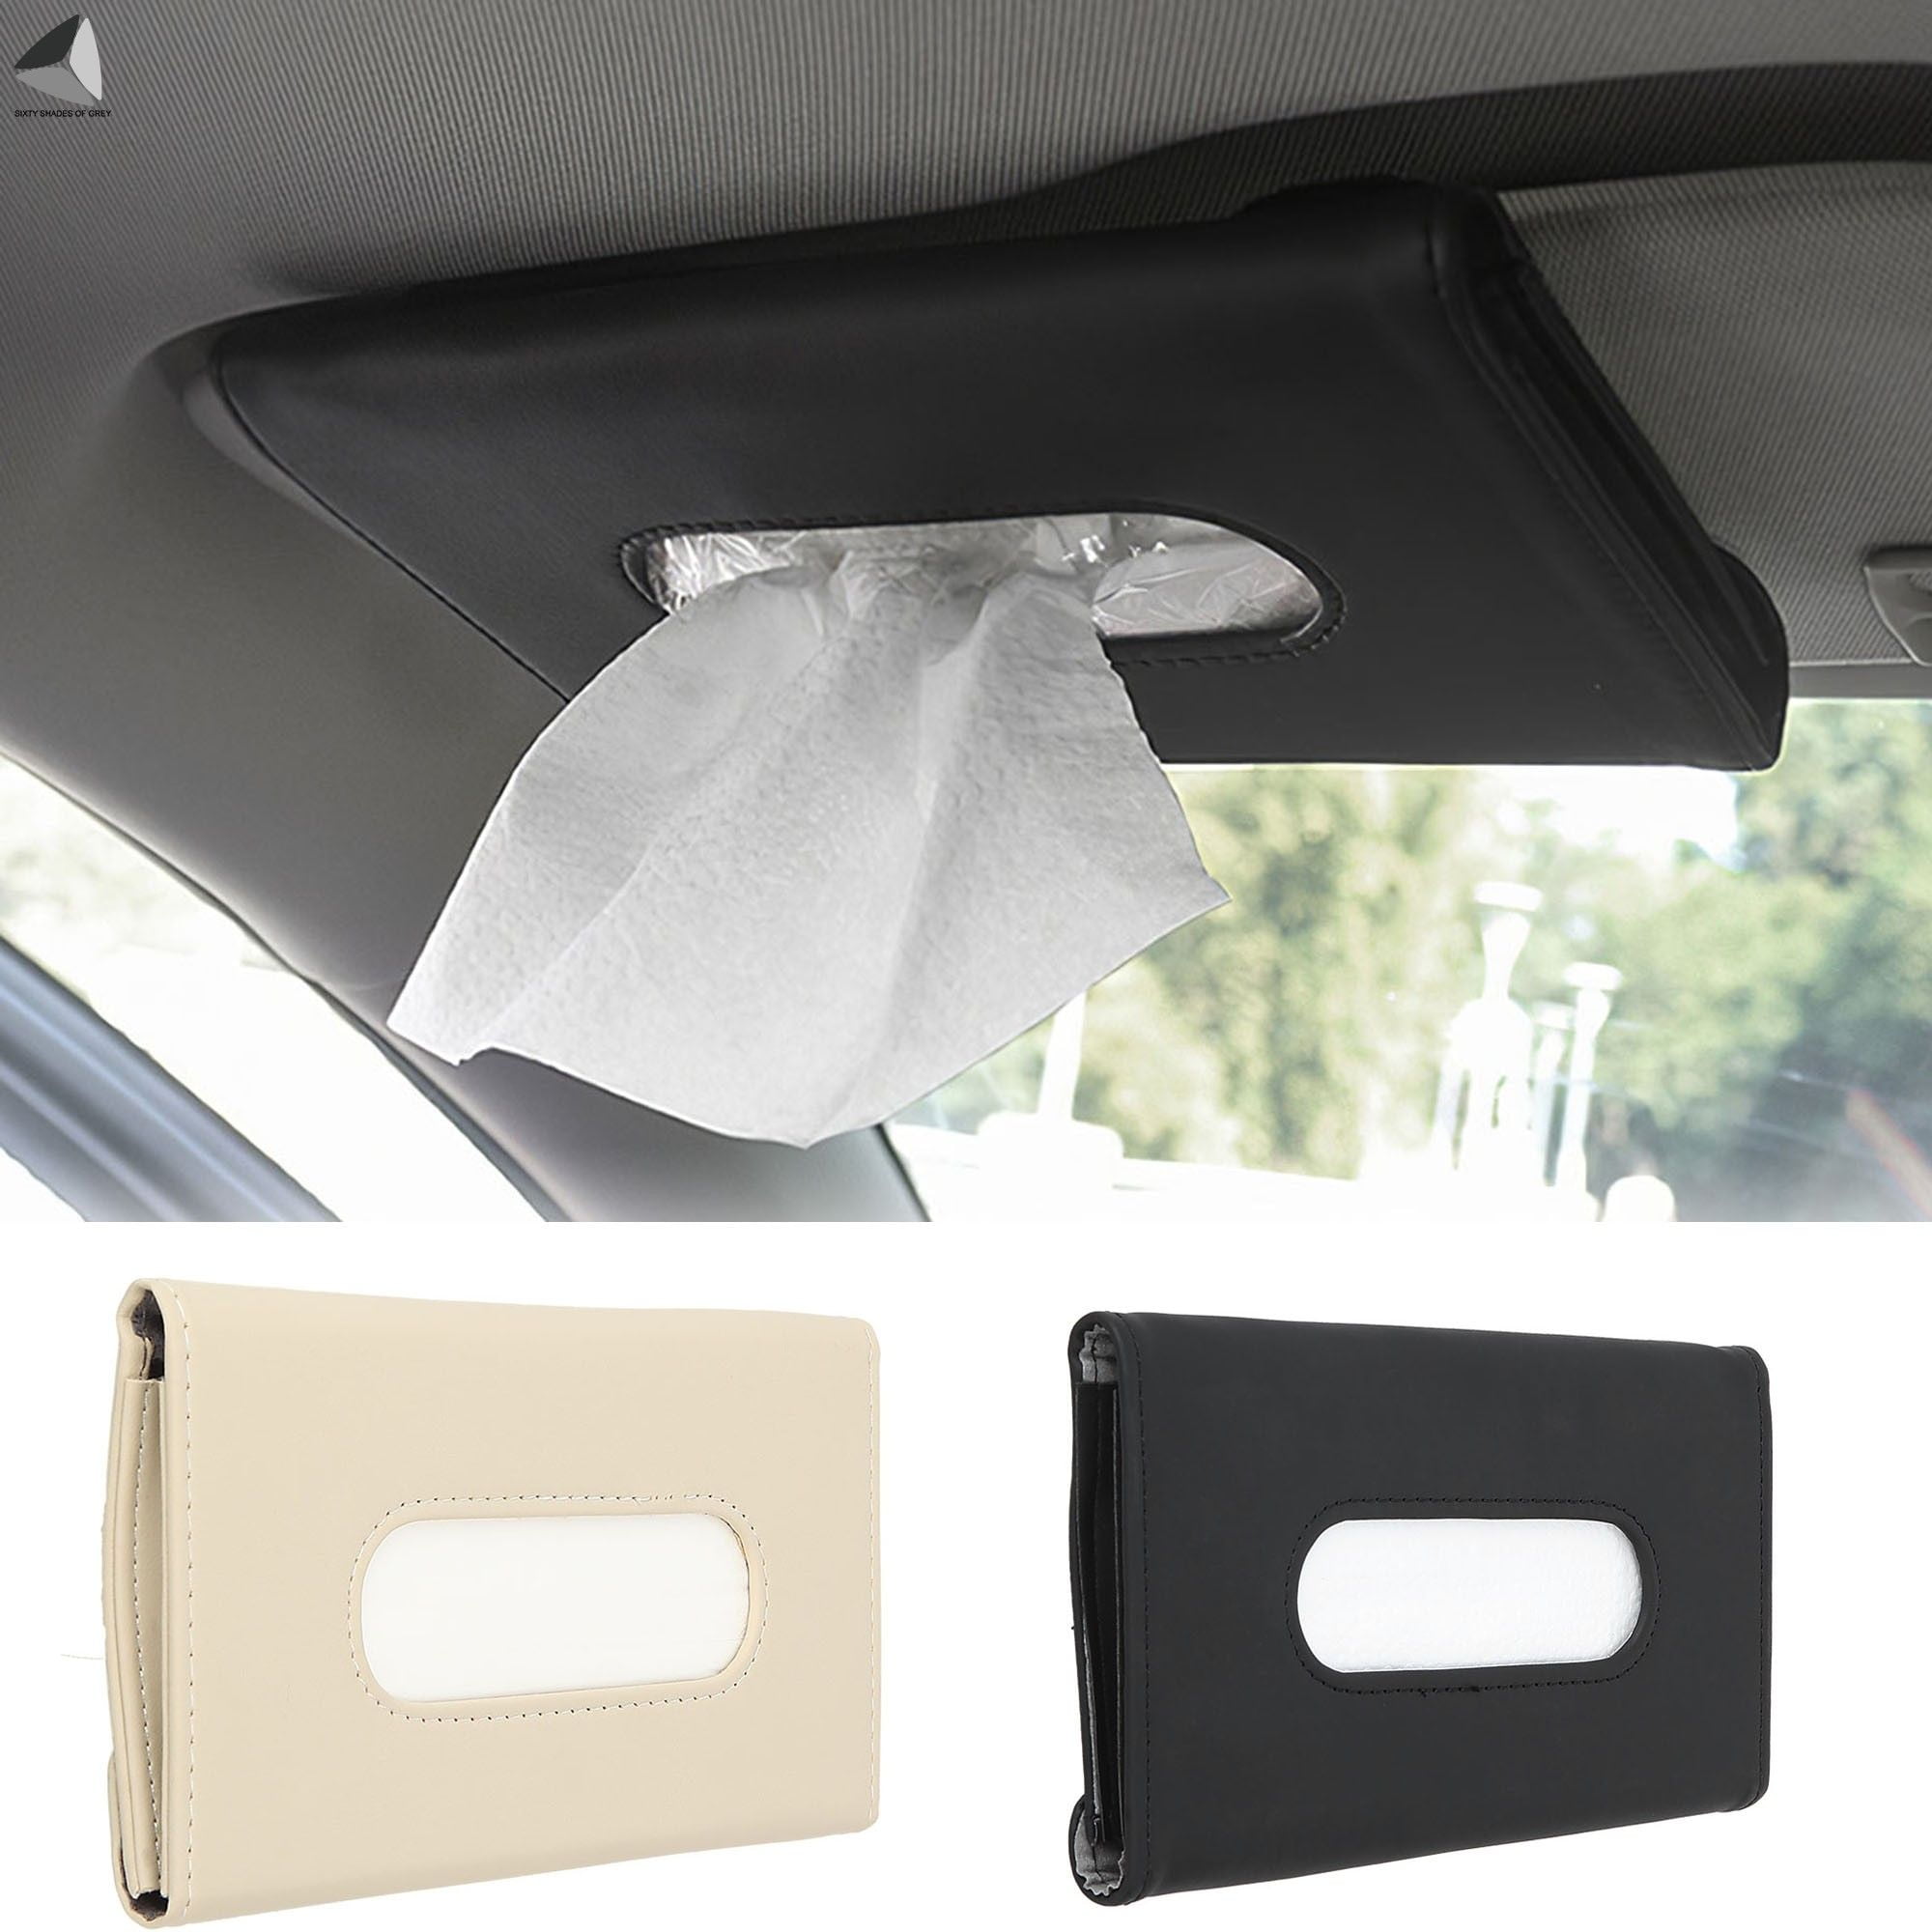 High quality of PU Leather Car Sun Visor Tissue Box Car inner styling for Car 1X 